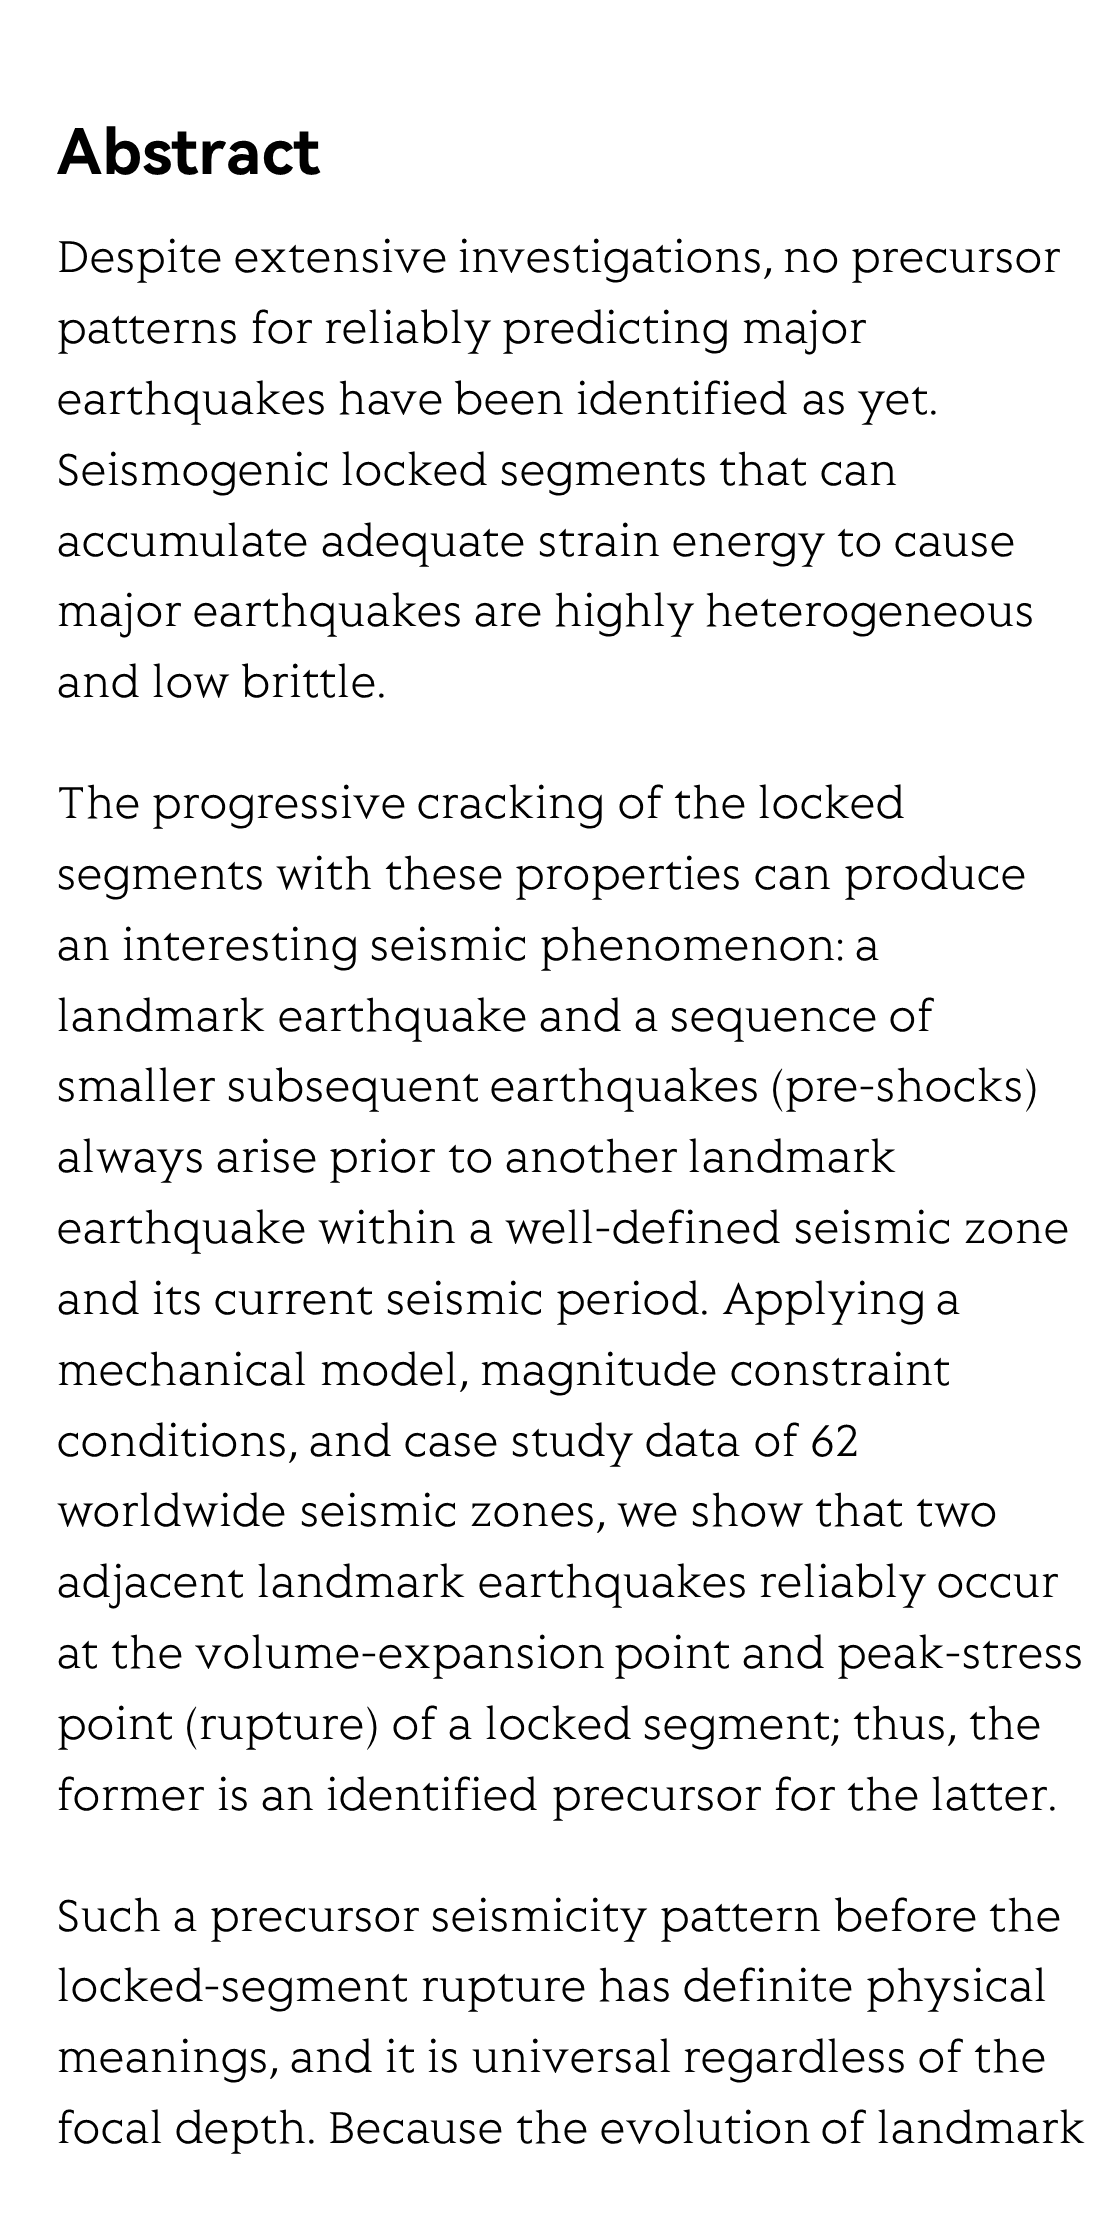 Universal precursor seismicity pattern before locked-segment rupture and evolutionary rule for landmark earthquakes_2